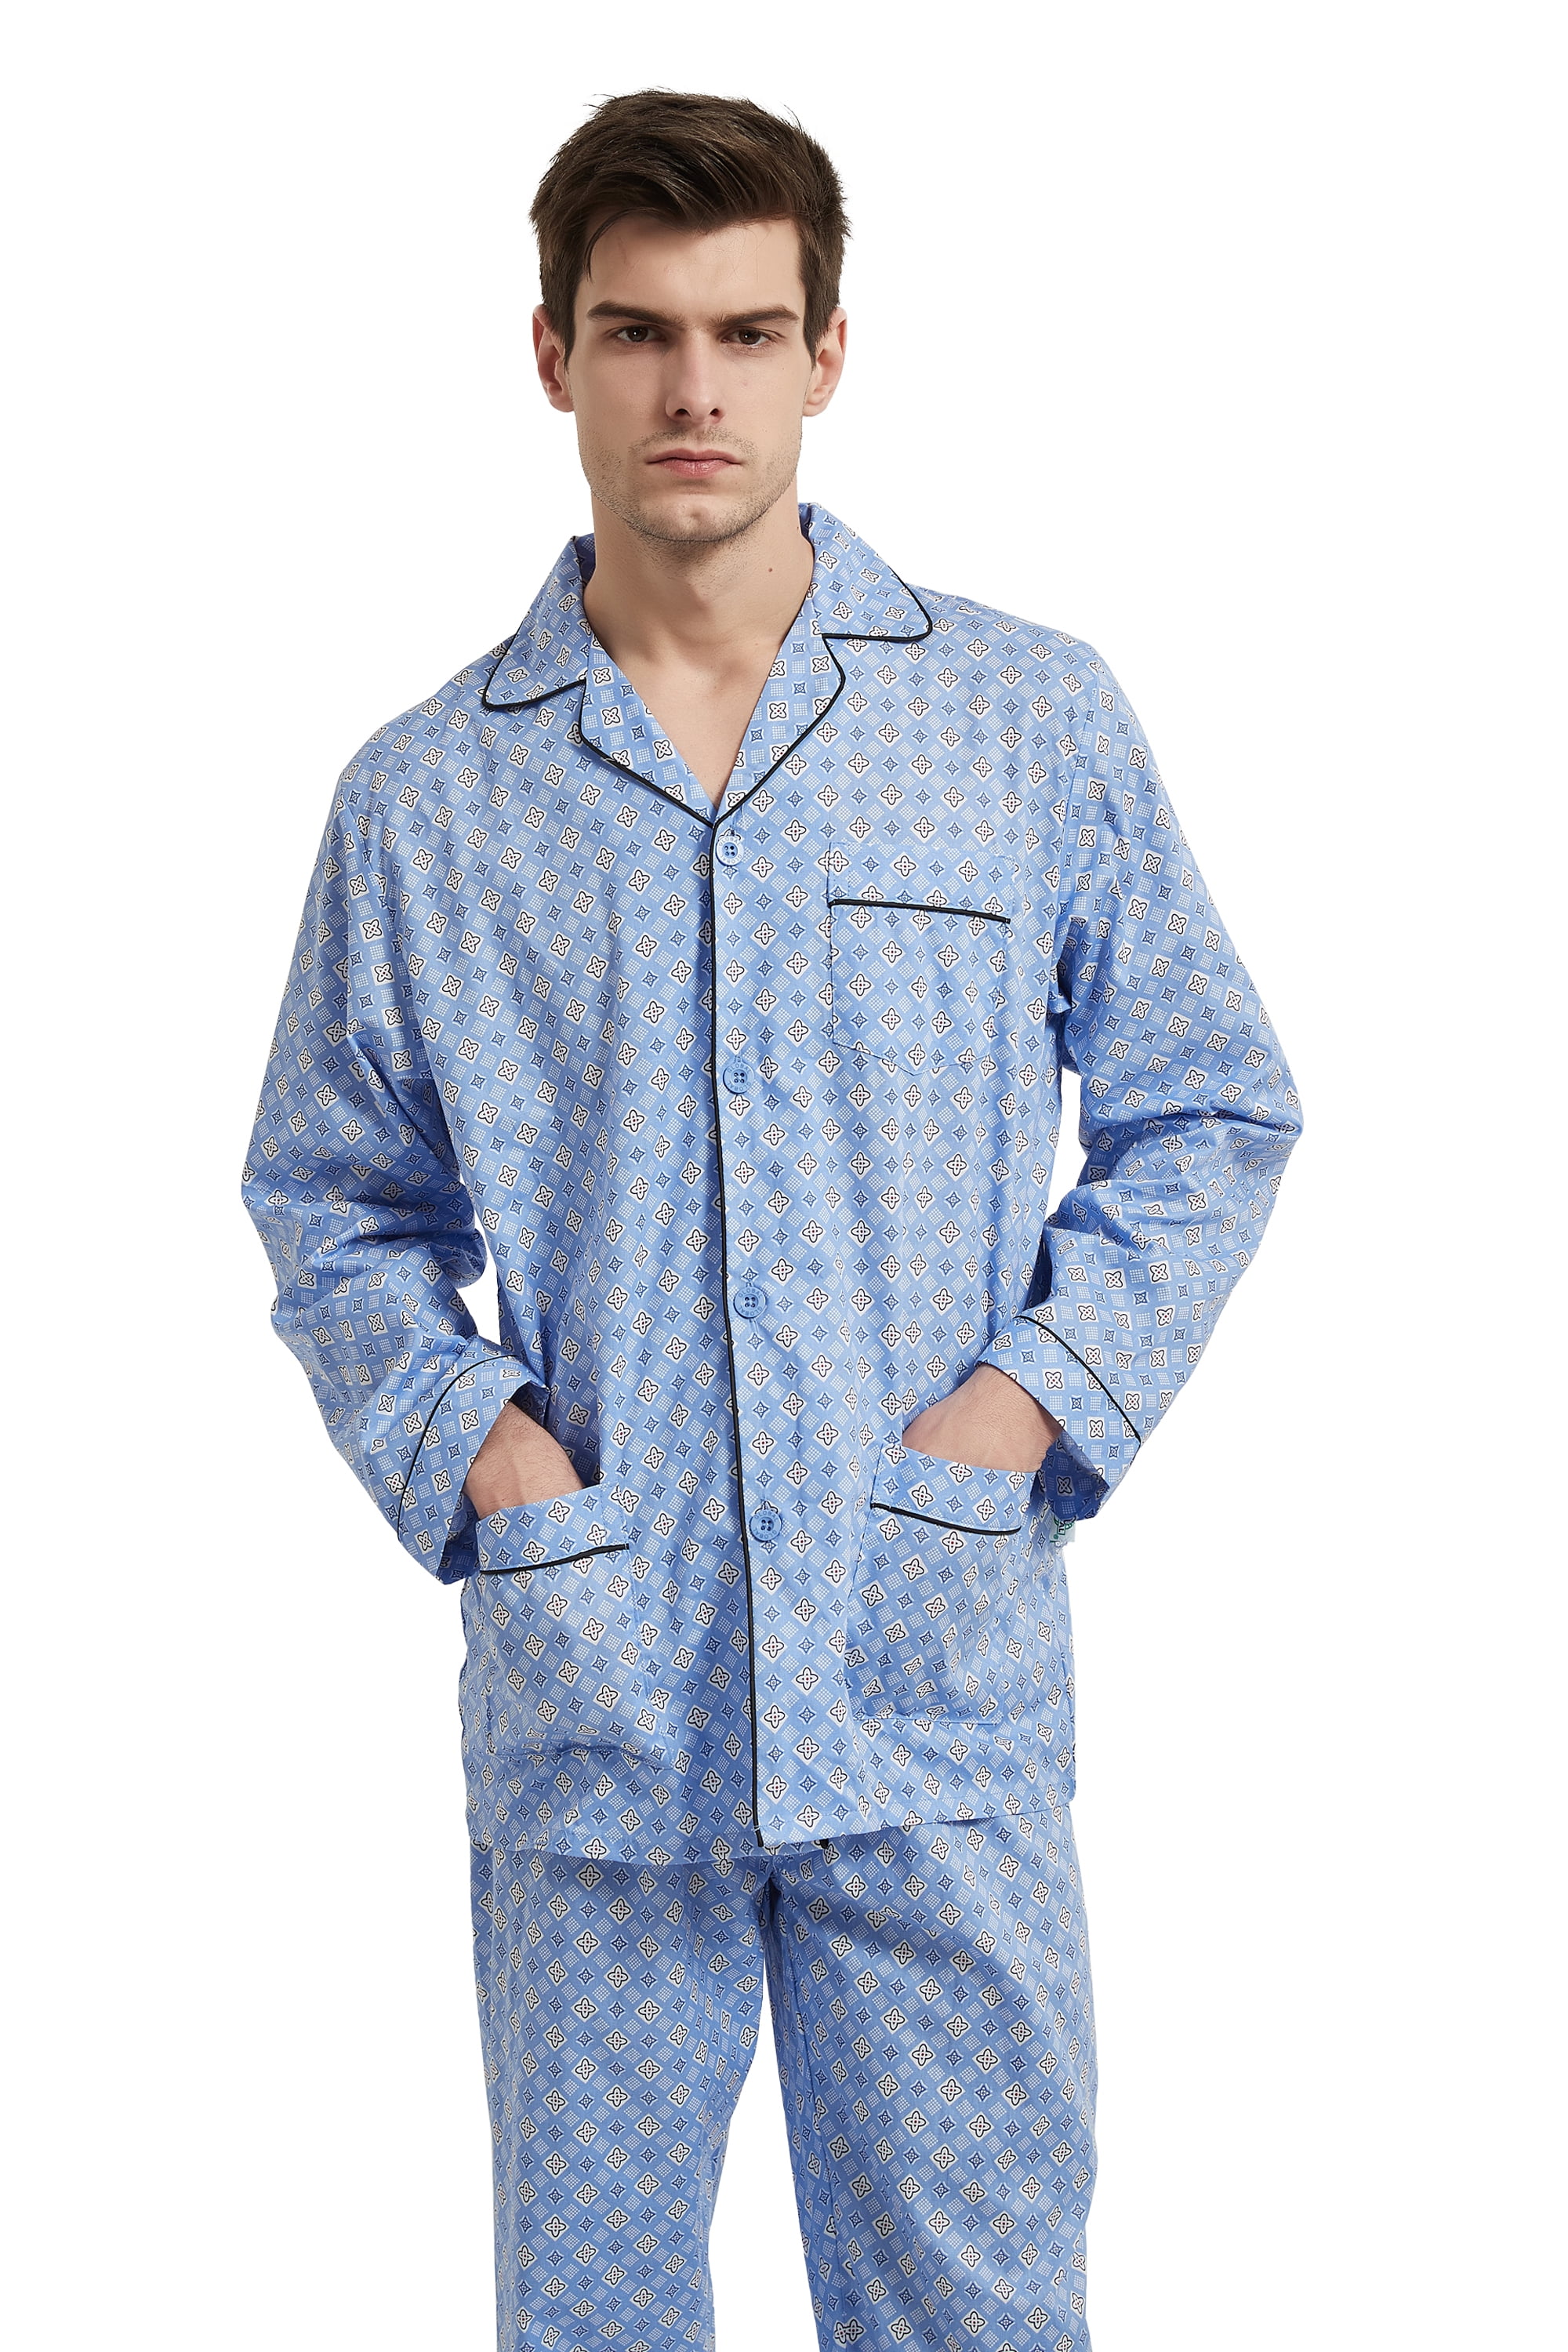 GLOBAL Men's Cotton Notch Collar Pajama Set with Pockets, 2-Piece ...